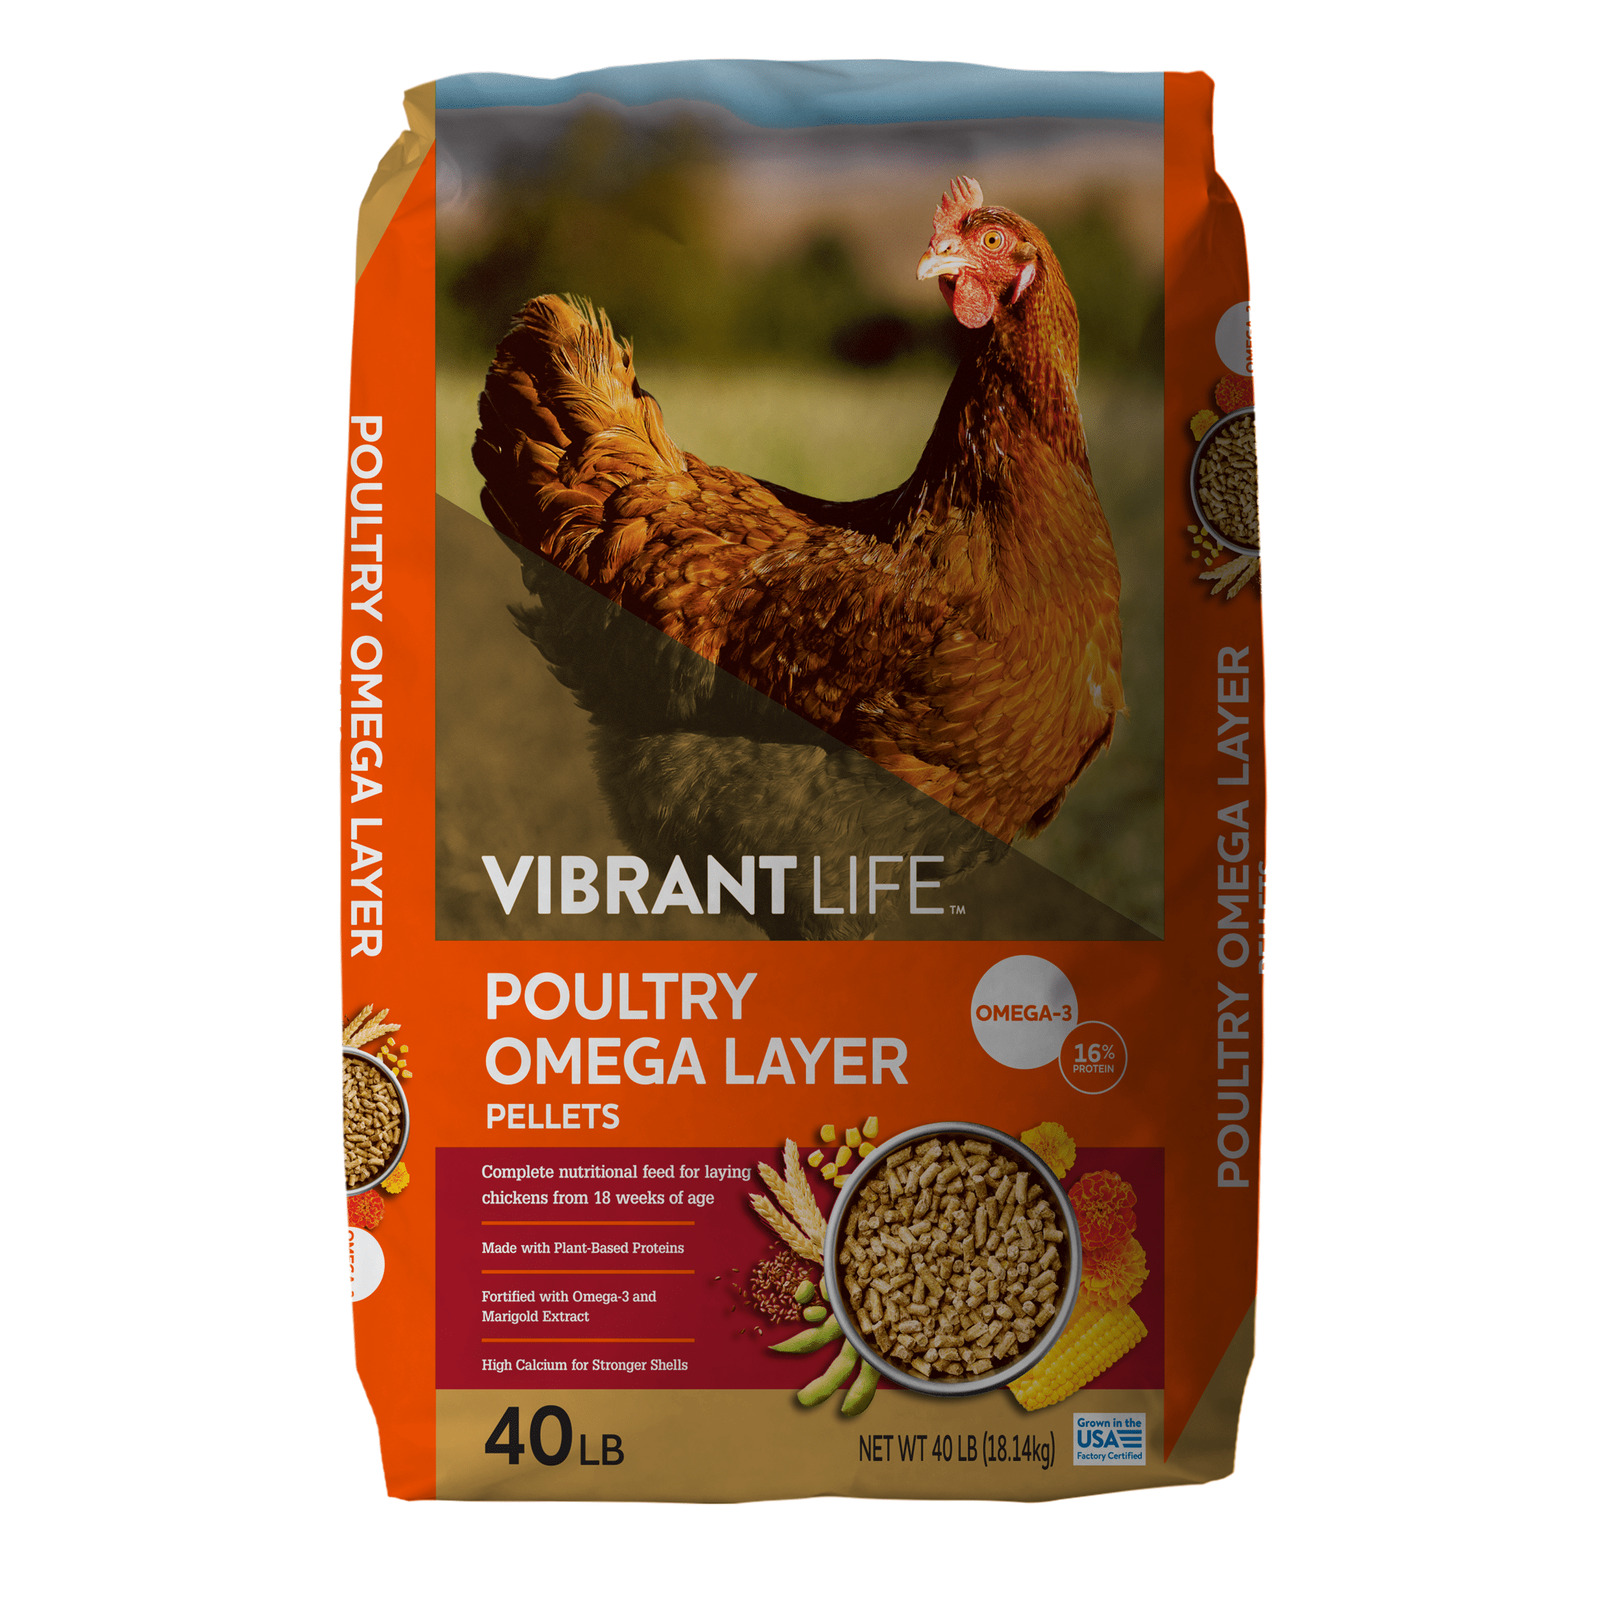 Vibrant Life Poultry Omega Layer Pellets 40 lb Bag